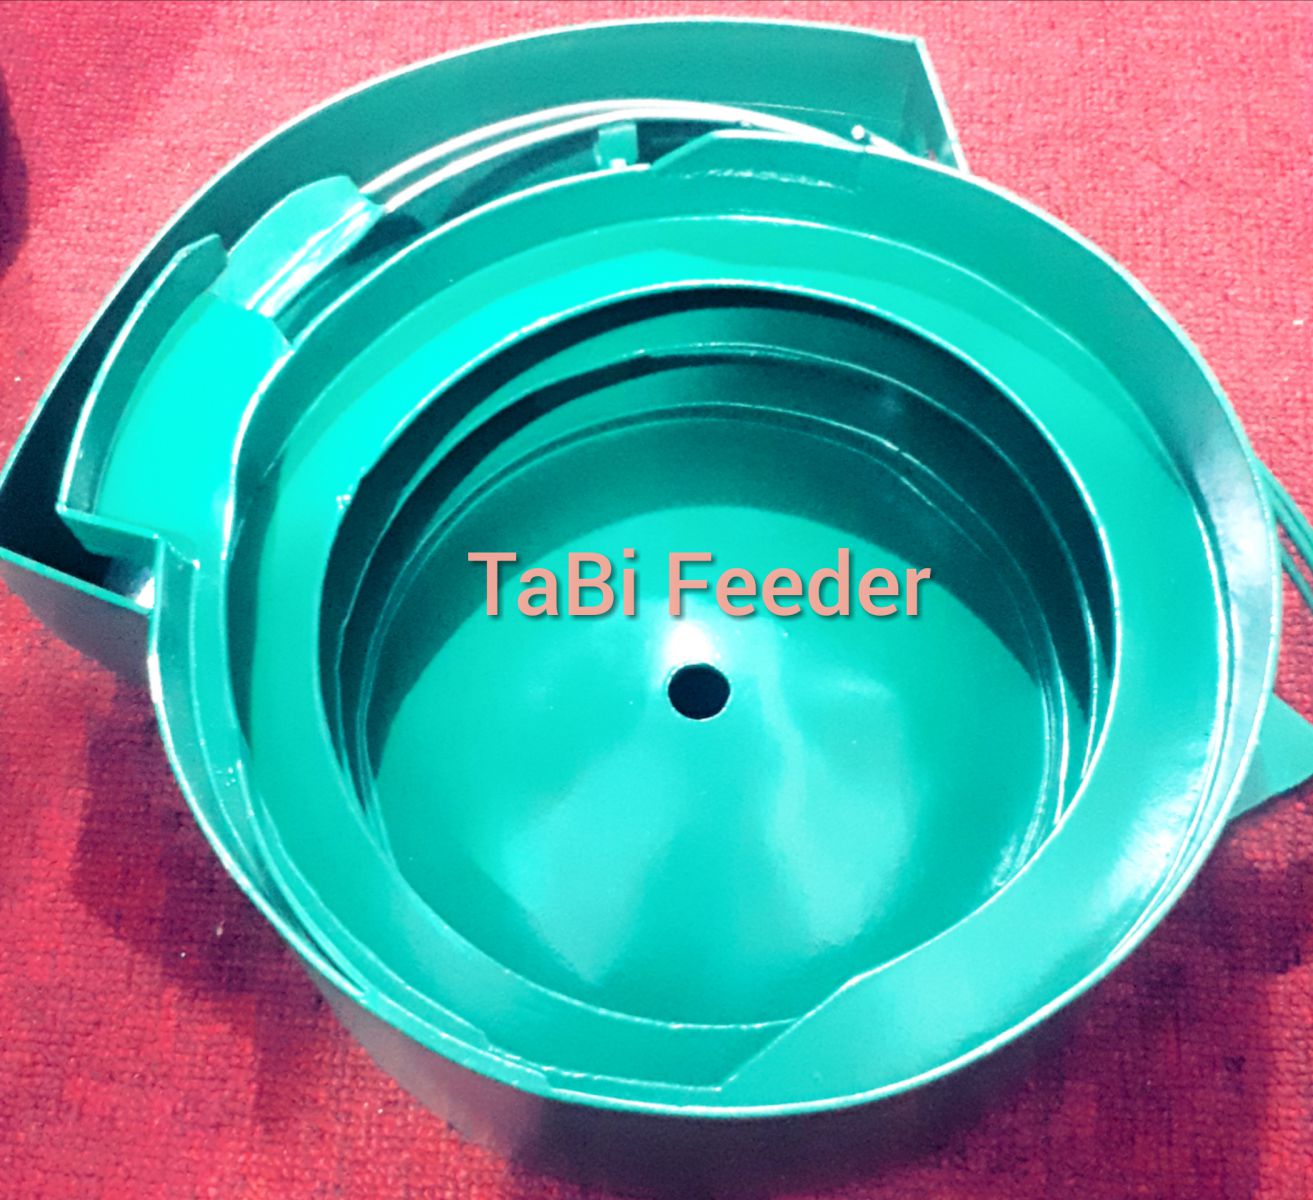 mâm rung (bowl feeder)